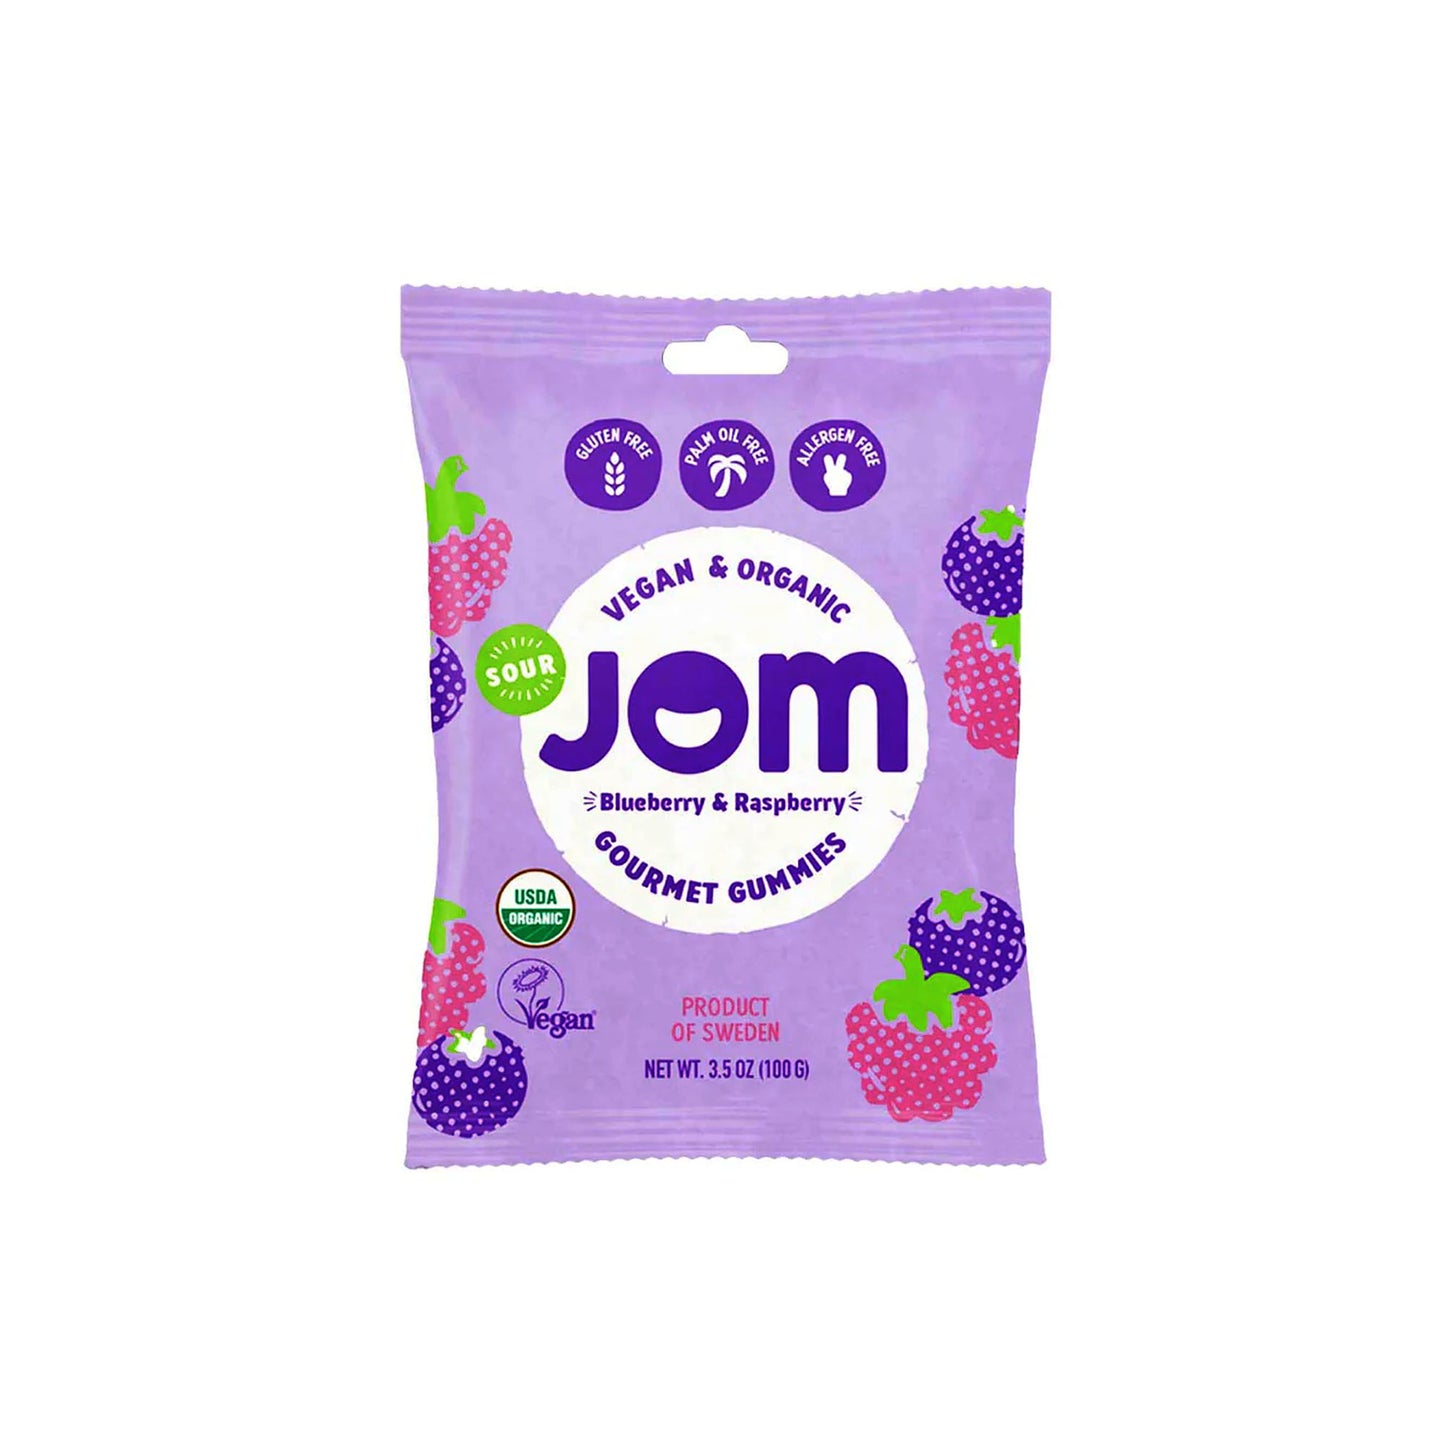 JOM Swedish Gourmet Gummies Variety Pack - Raspberry & Blackcurrant, Sour Blueberry & Raspberry, Retro Cola, Strawberry & Peach (Pack of 4)